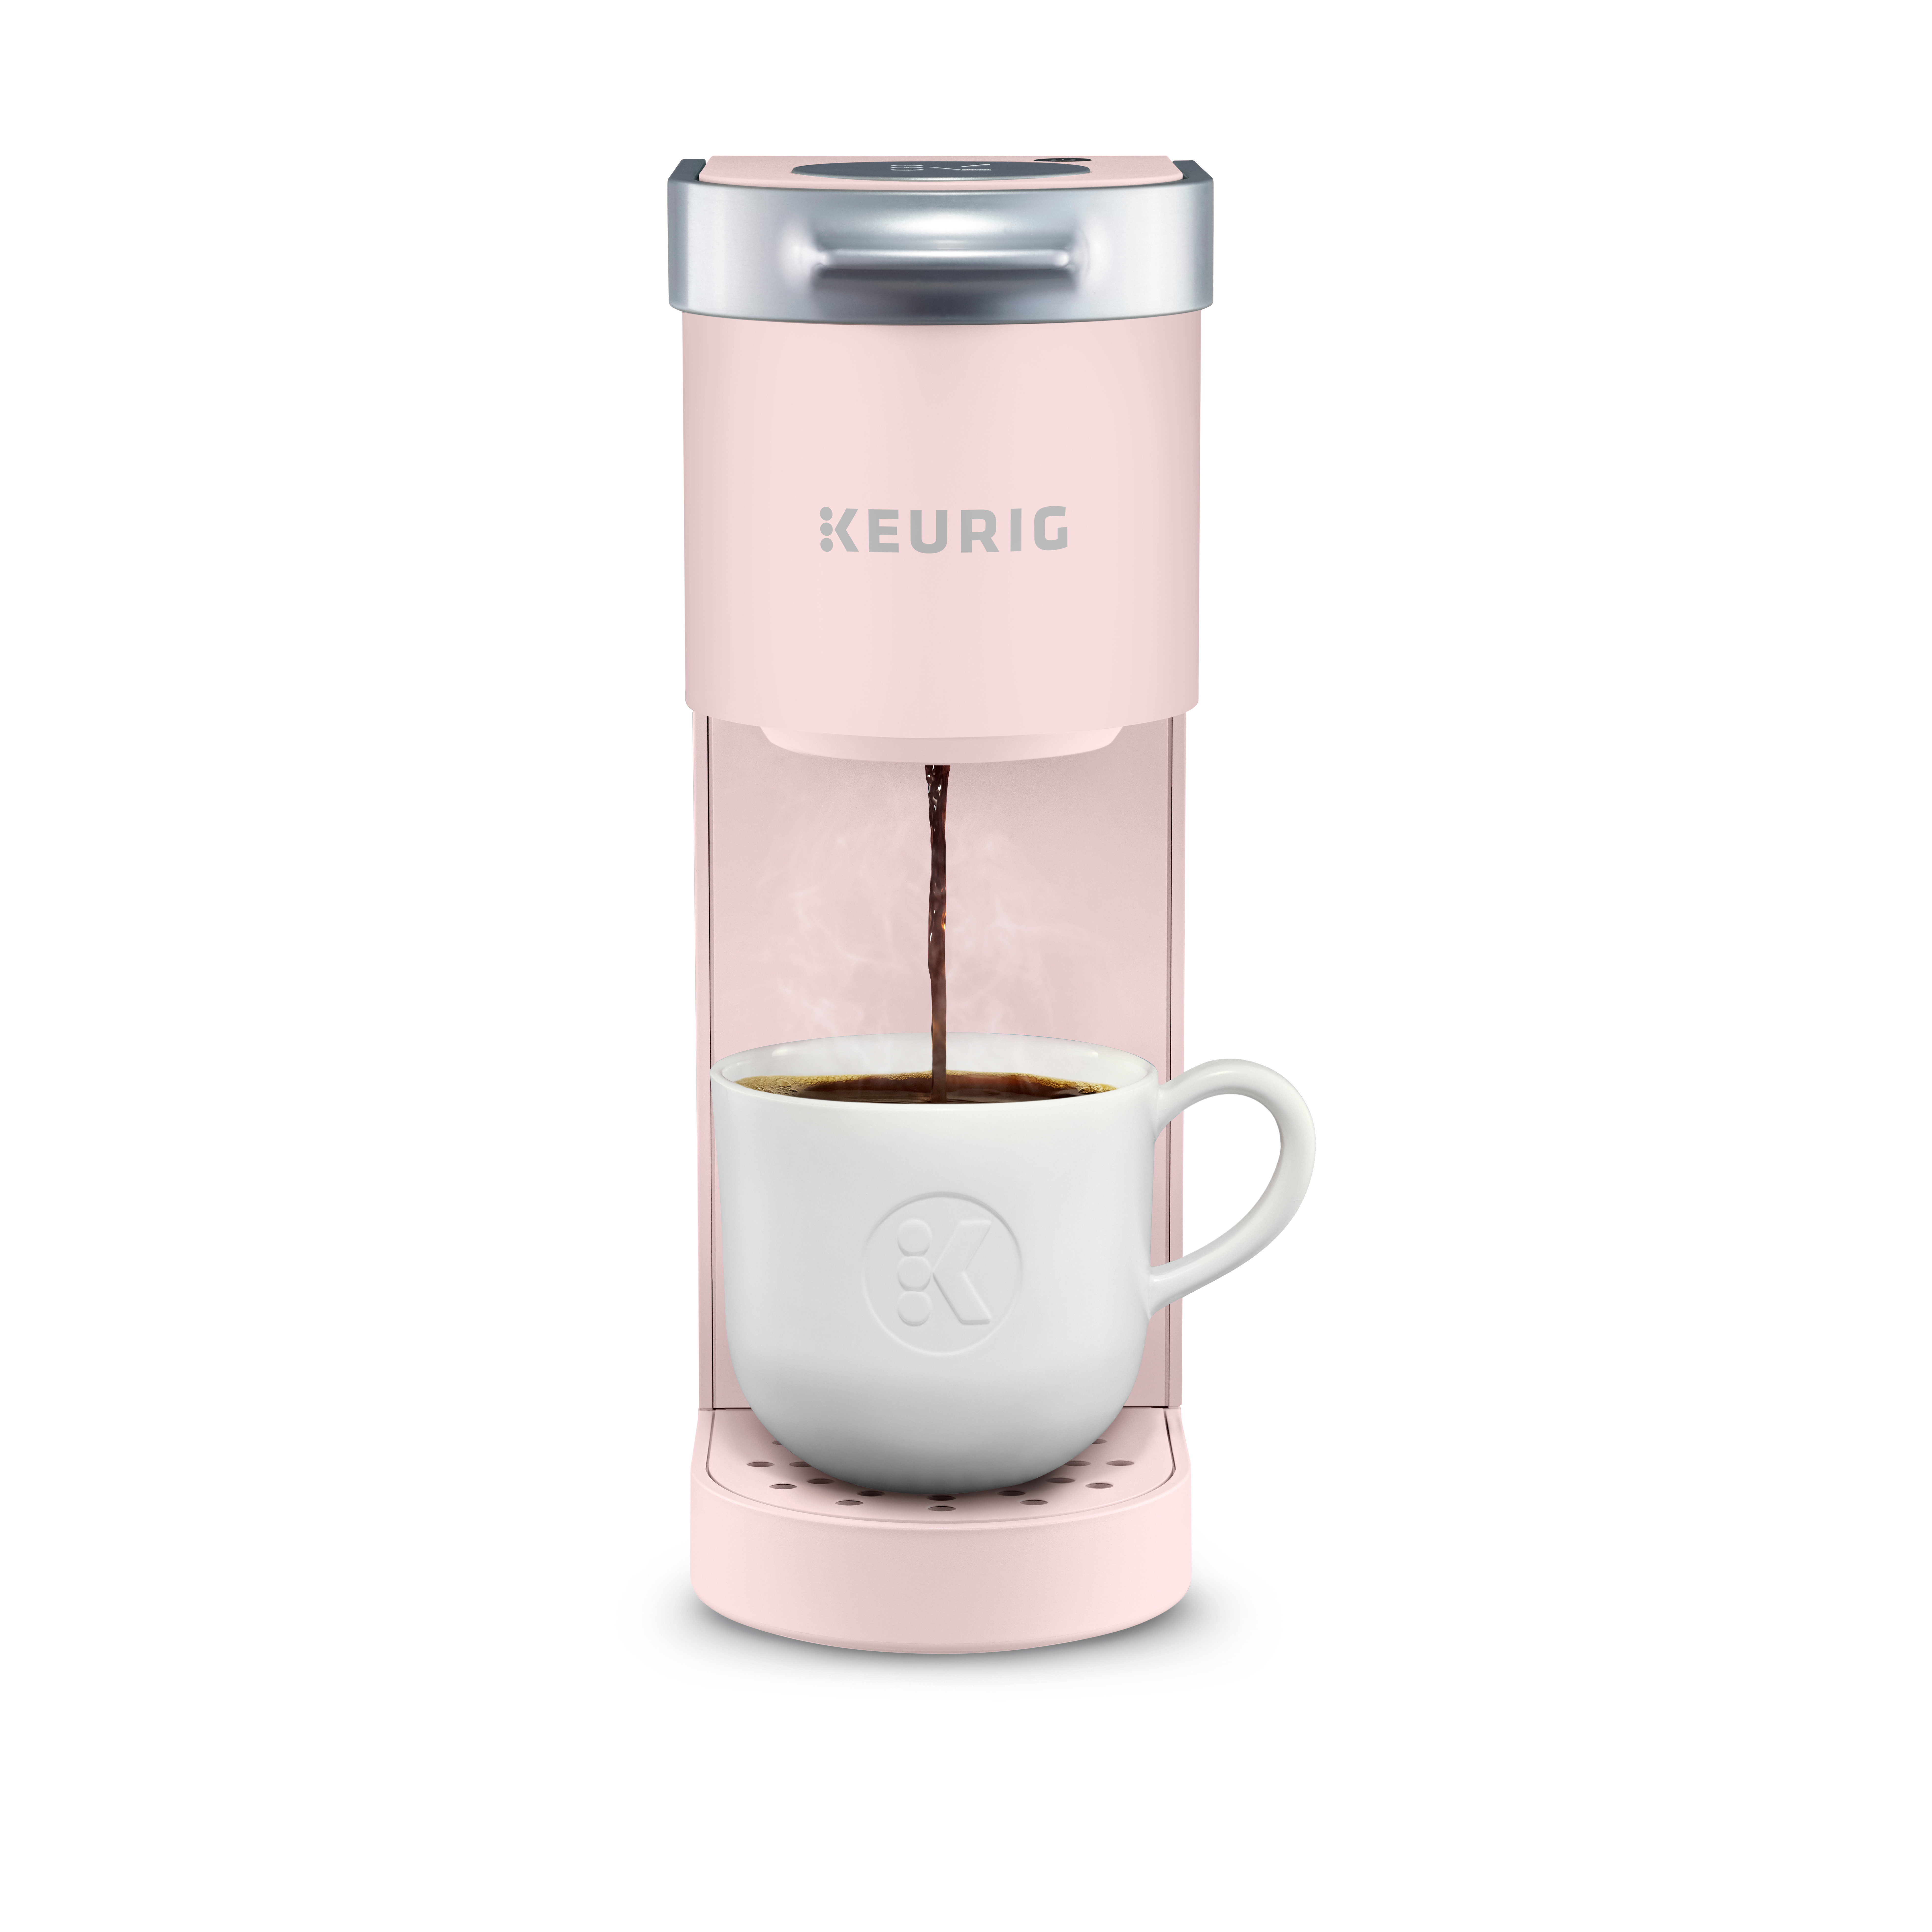 Keurig K-Mini Single Serve K-Cup Pod Coffee Maker, Dusty Rose - image 1 of 20